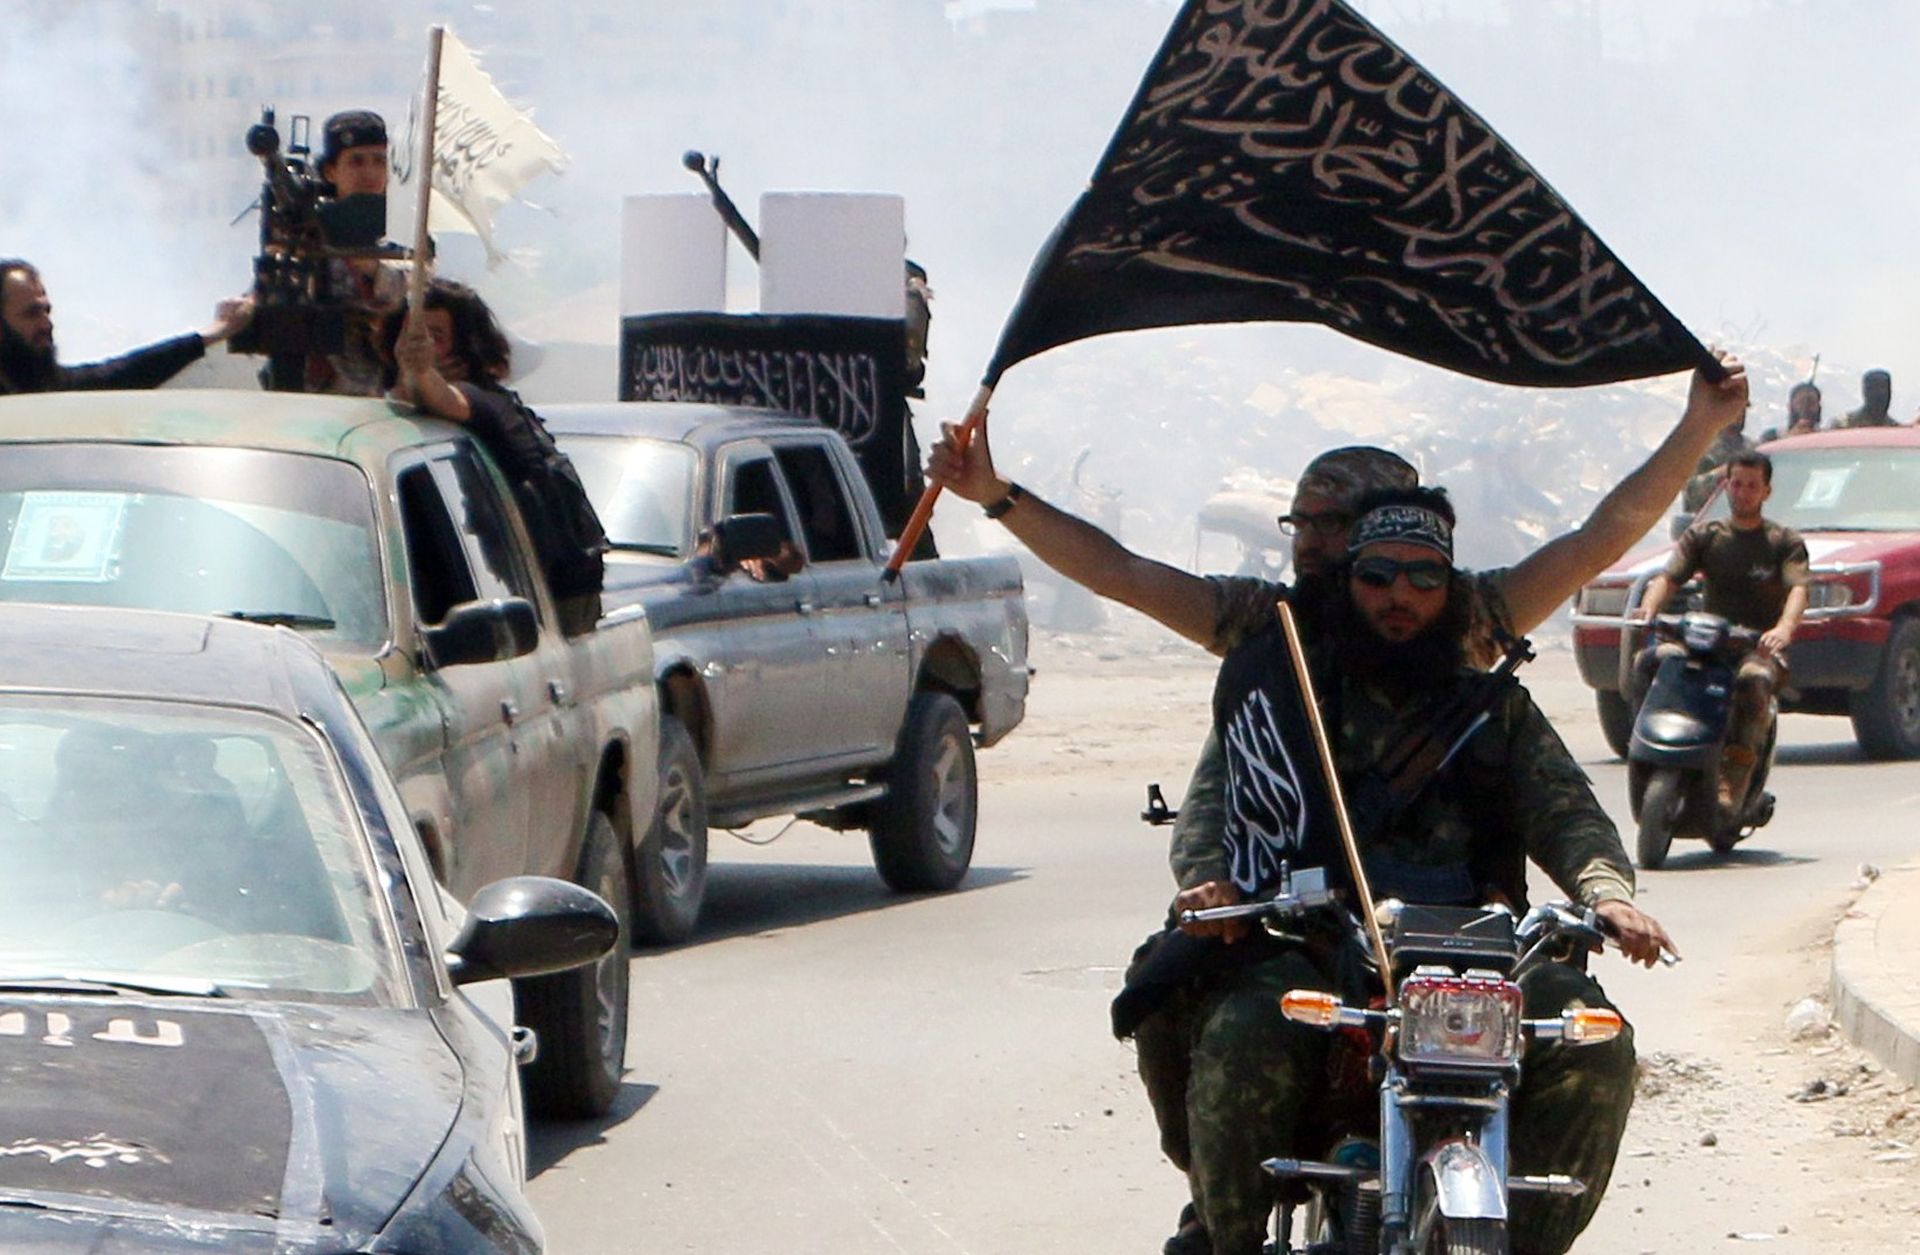 Fighters from Al-Qaeda's Syrian affiliate, Jabhat al-Nusra